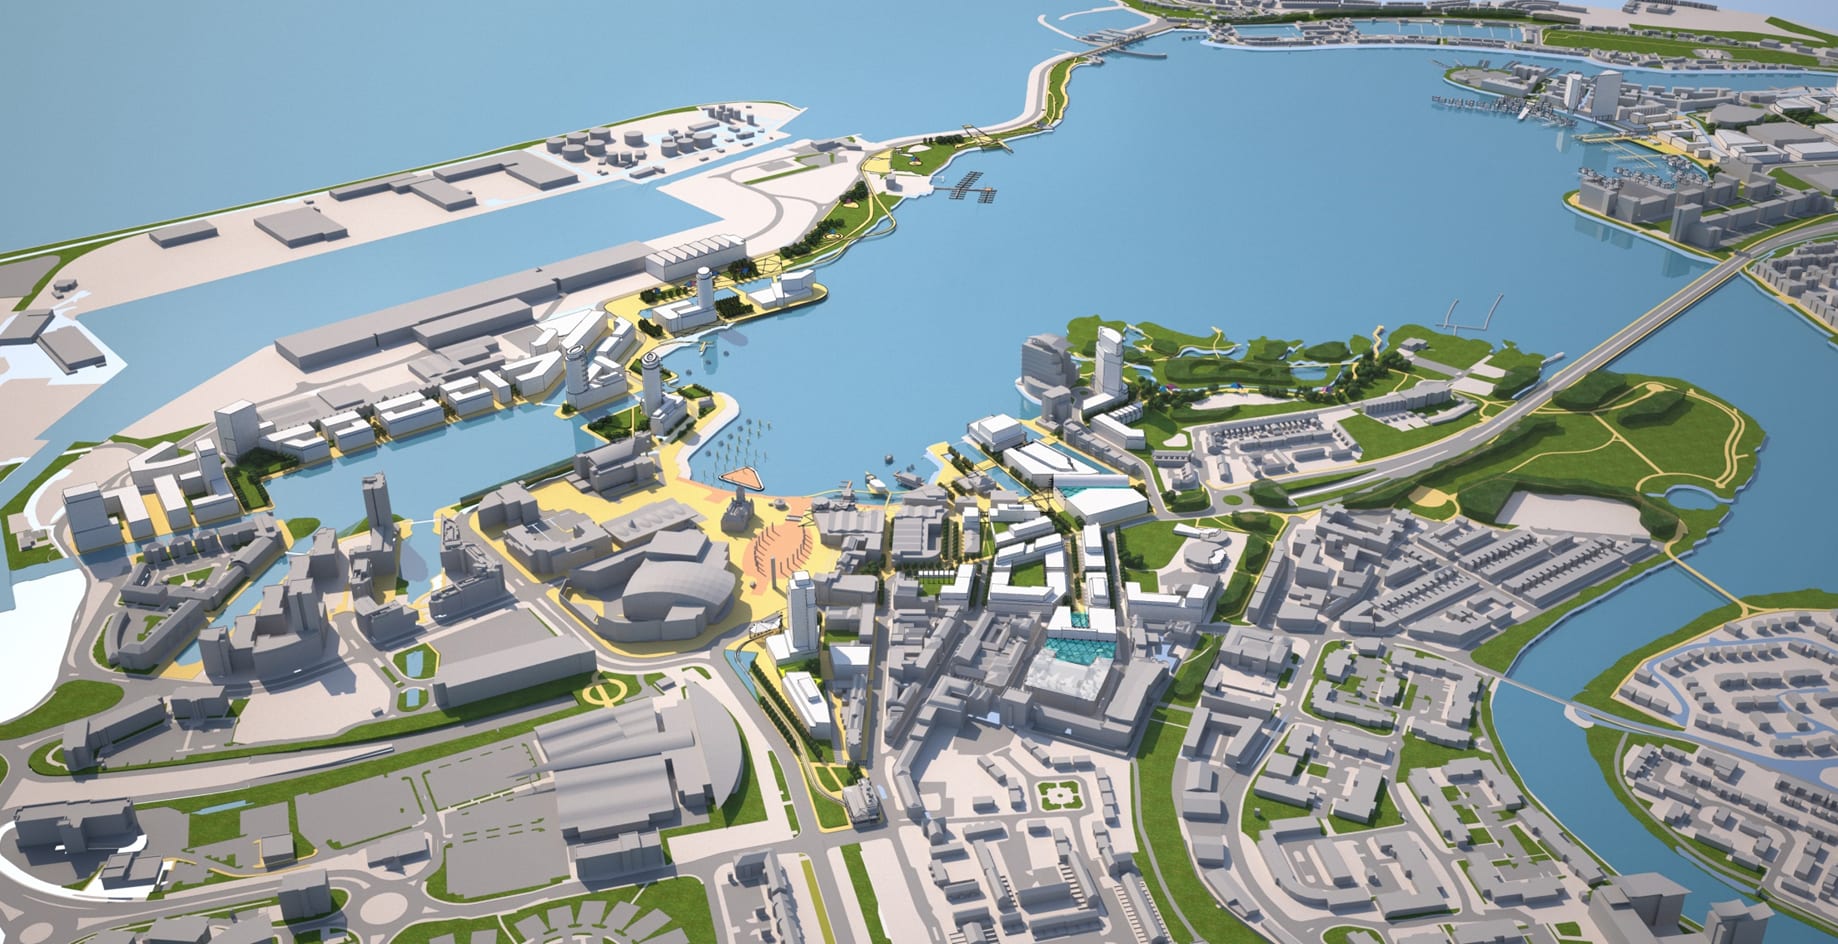 Cardiff Bay waterfront master plan aerial rendering